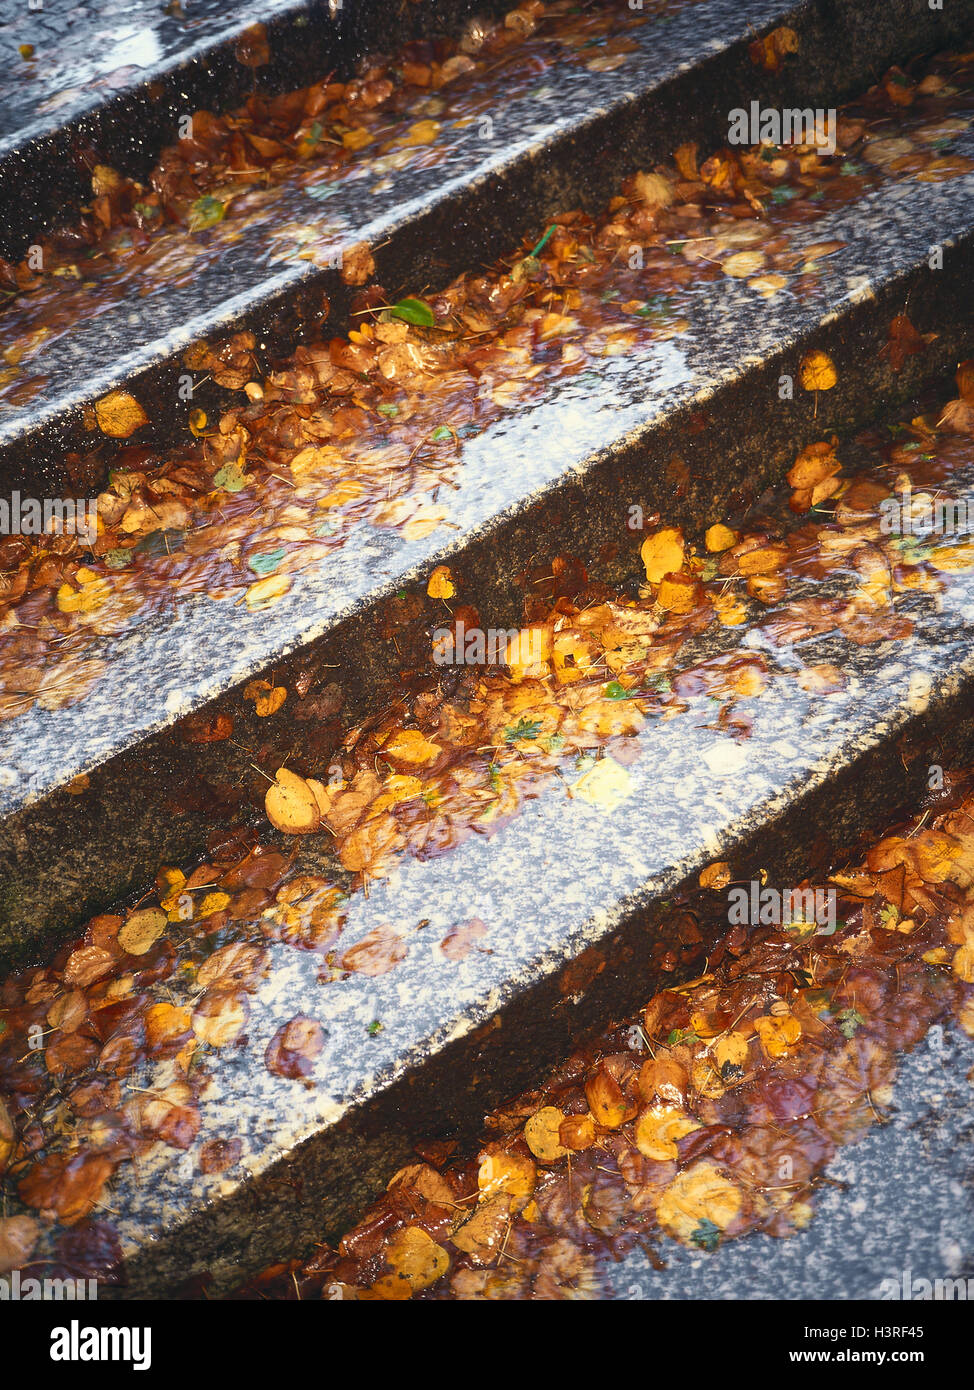 Stairs, steps, wet, autumn foliage, stone steps, foliage, rain, danger collision, slippery, slide danger, autumn, leaves, moisture Stock Photo